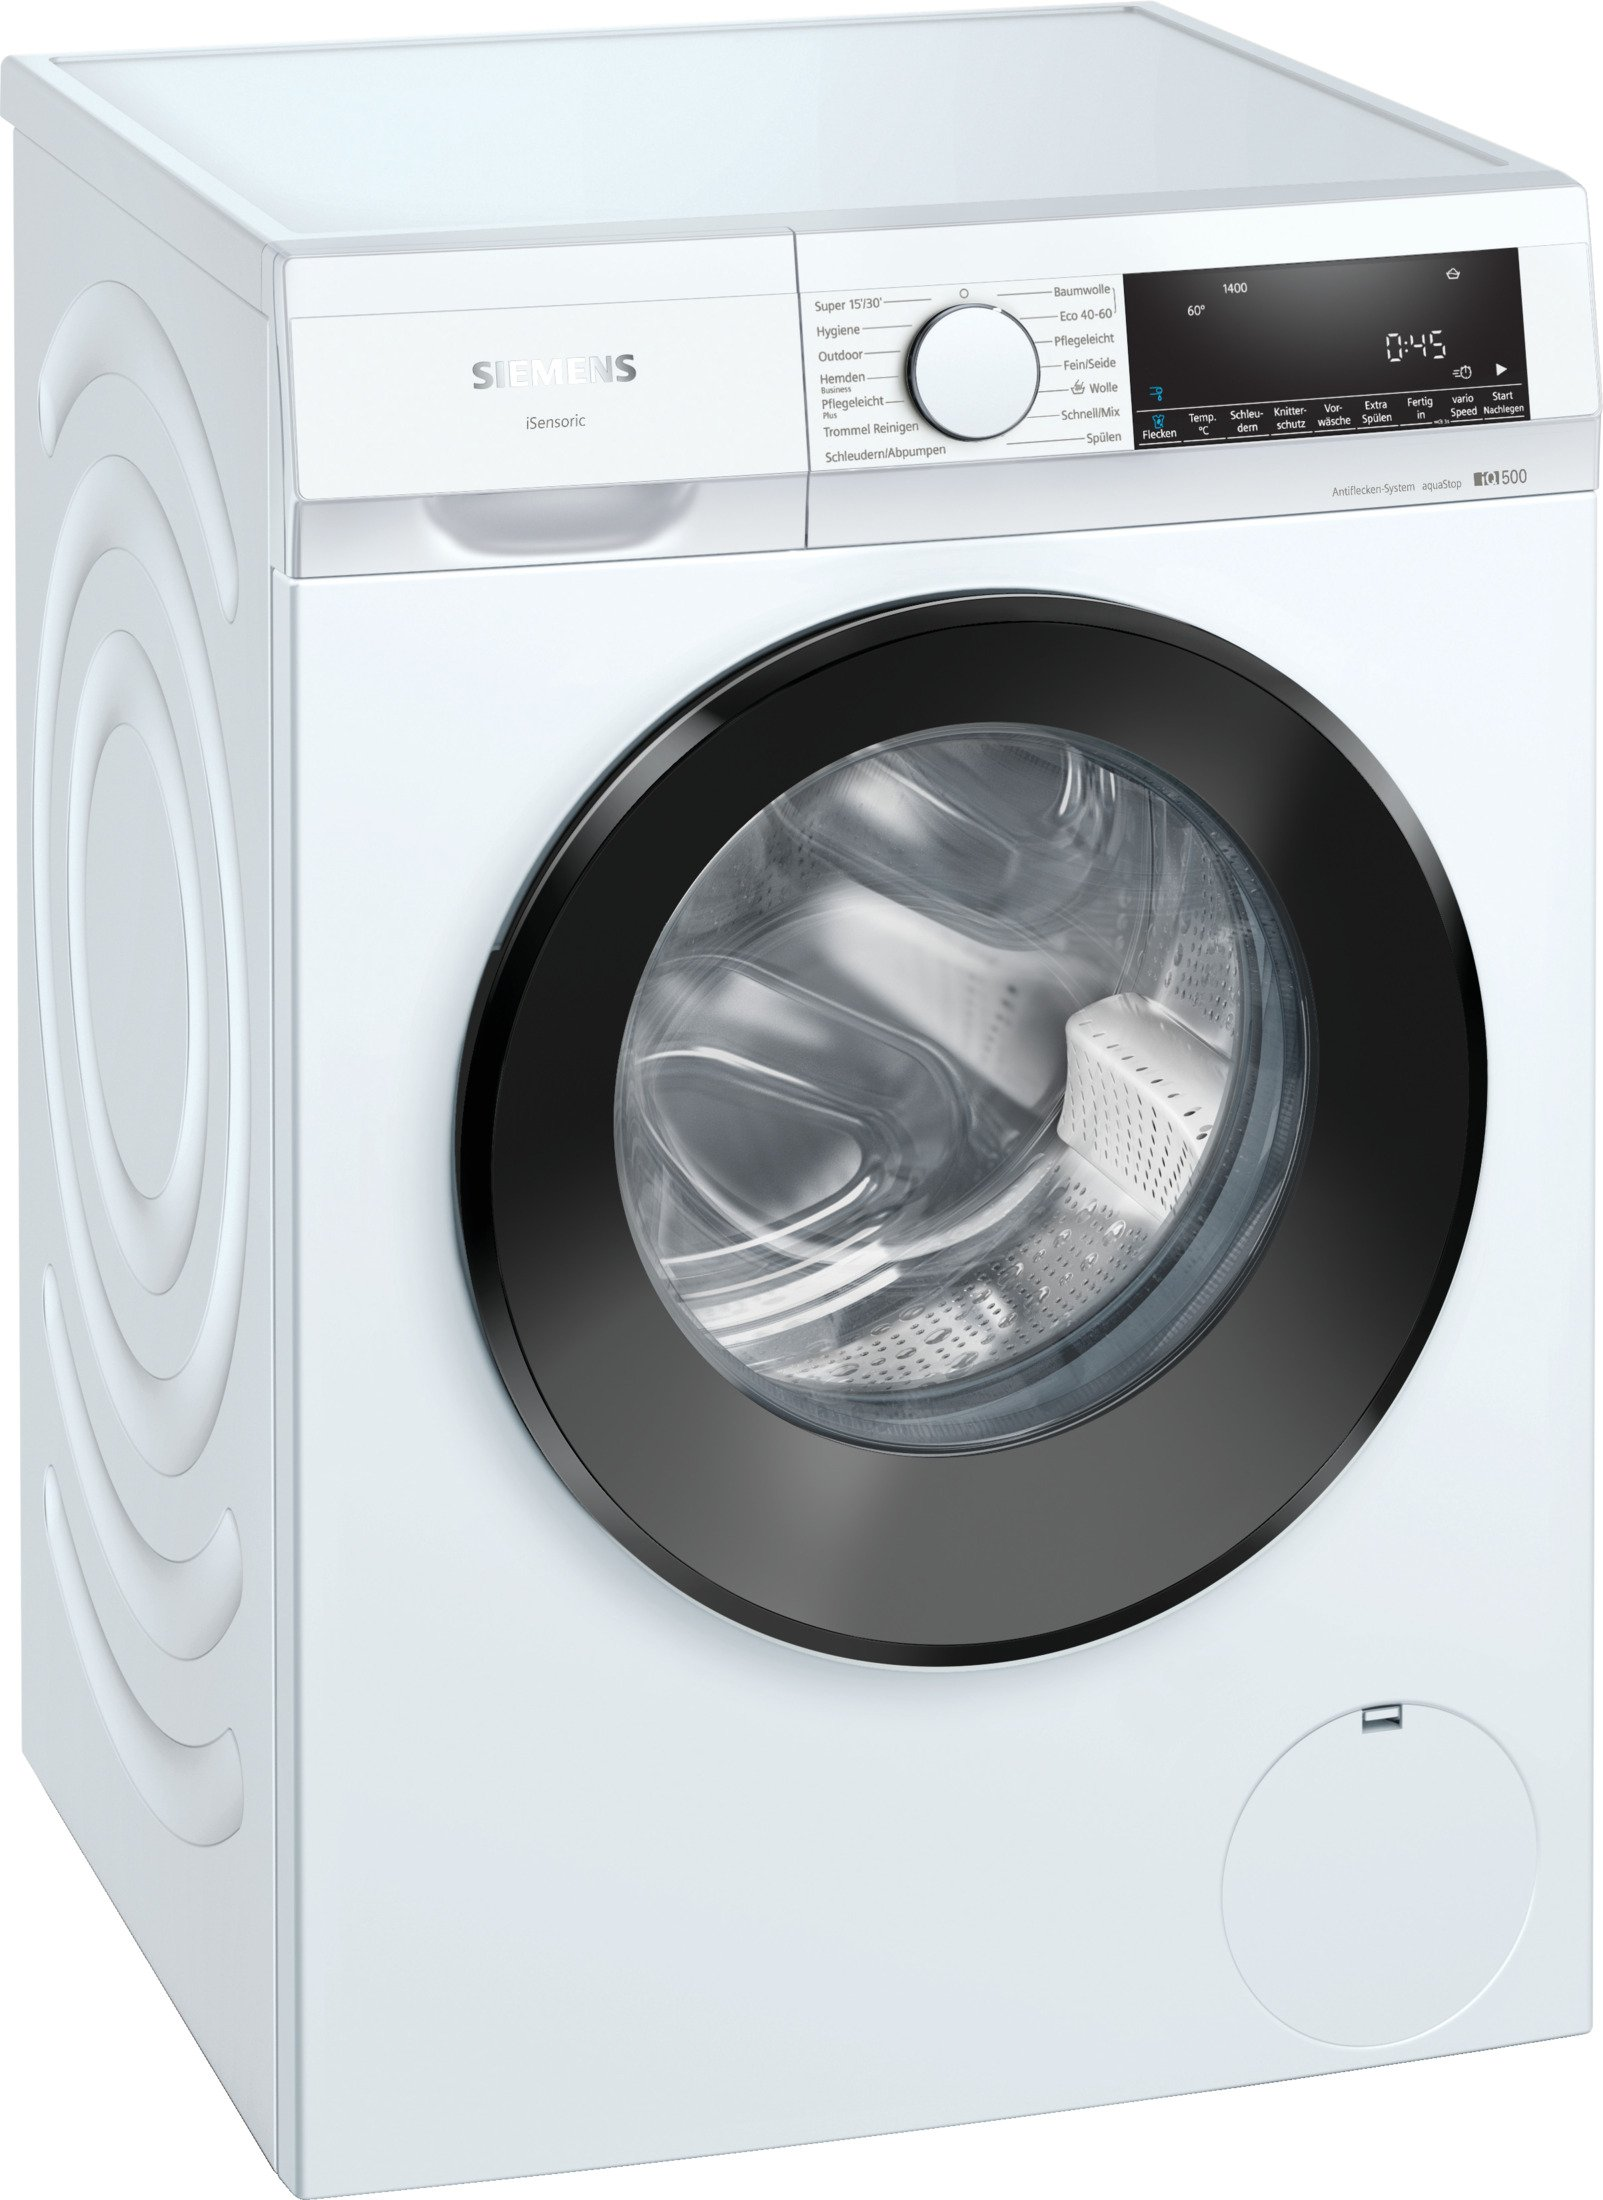 SIEMENS WG 54 G 105 C) (10 EM Waschmaschine iQ500 U/Min., kg, 1400